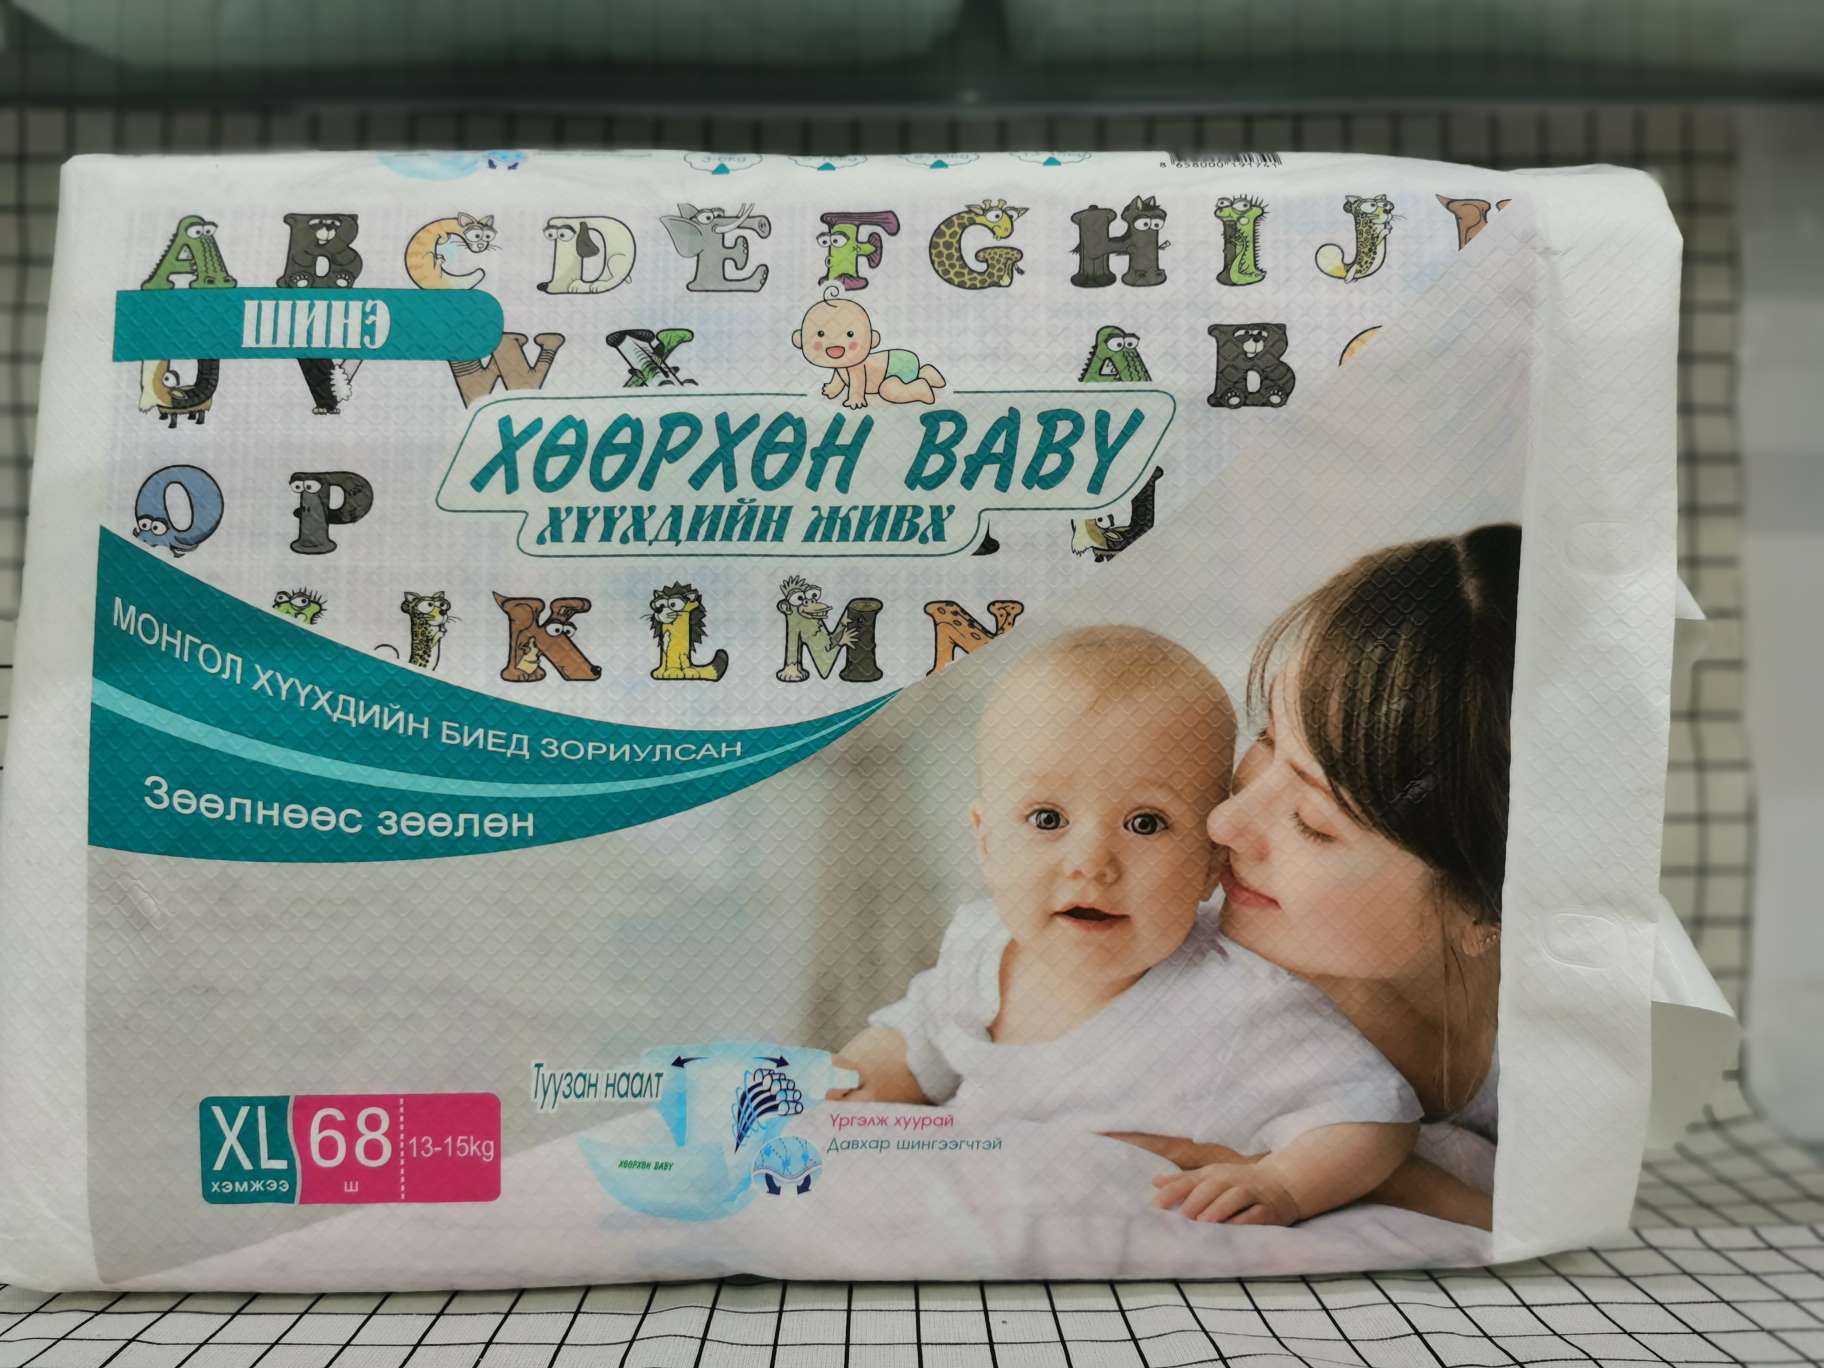 baby diaper :
XL68 pcs
电联订做详情图1